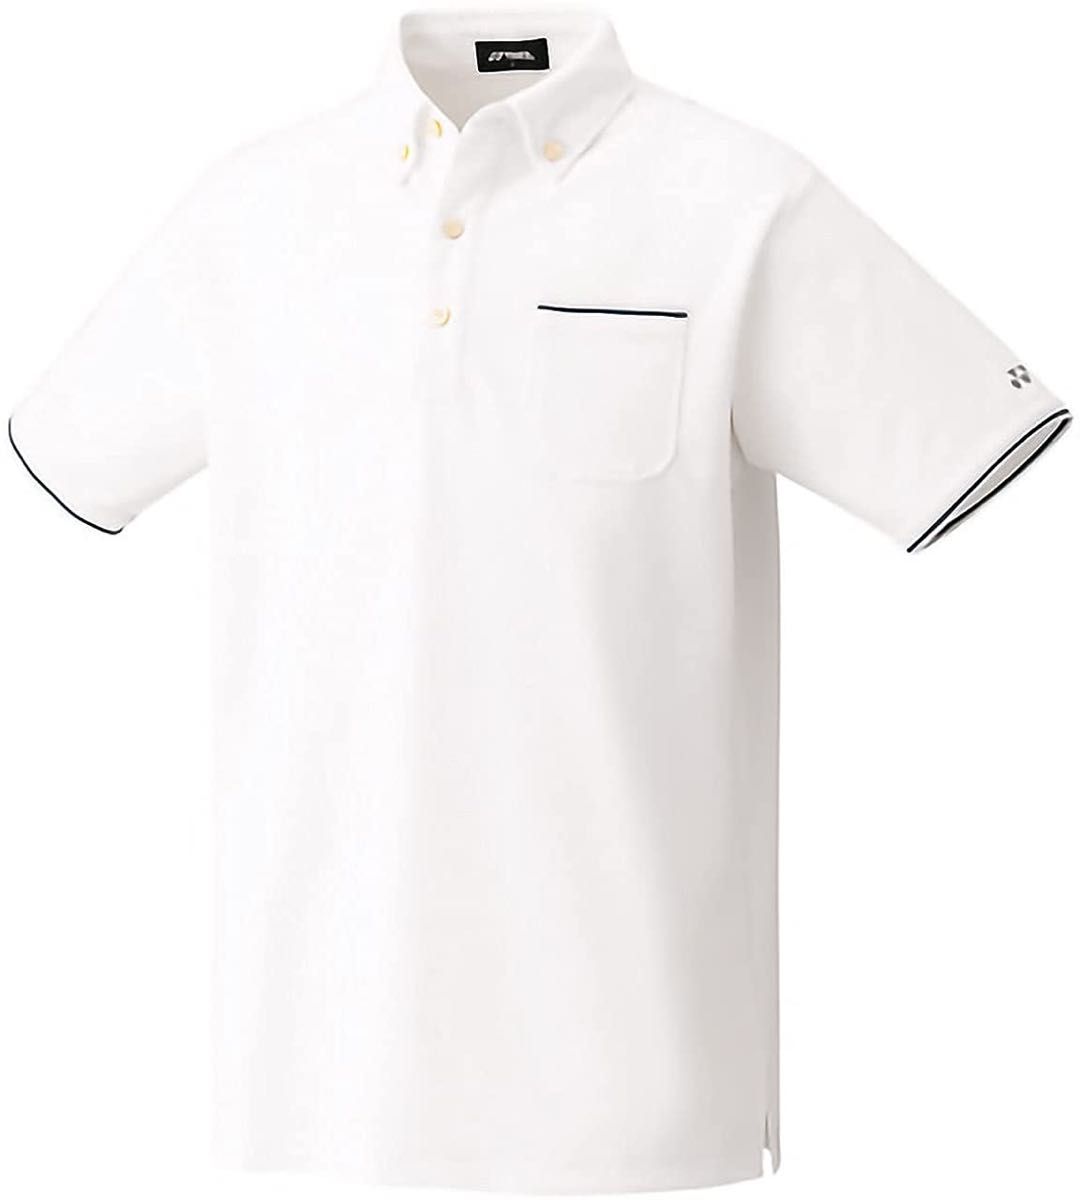 YONEX ヨネックス テニスウェア 半袖ポロシャツ 10414 ホワイト(白) ユニセックスM新品